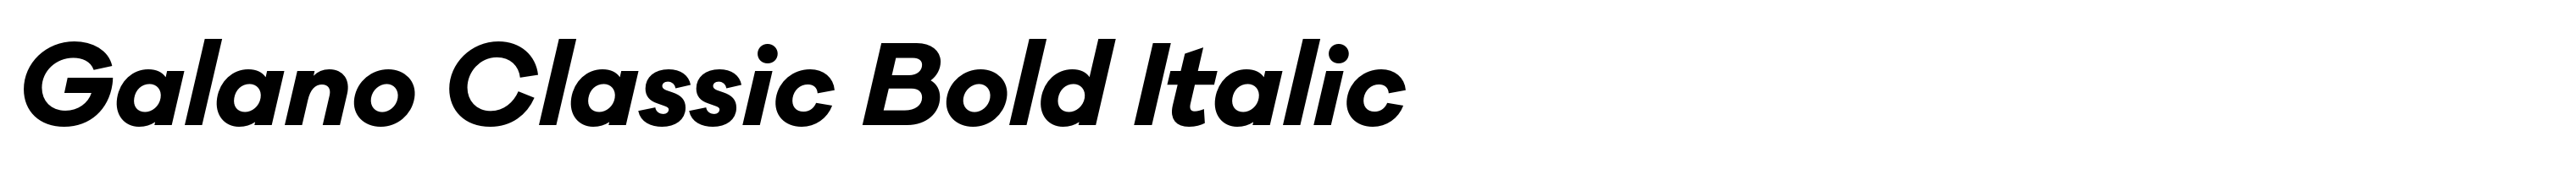 Galano Classic Bold Italic